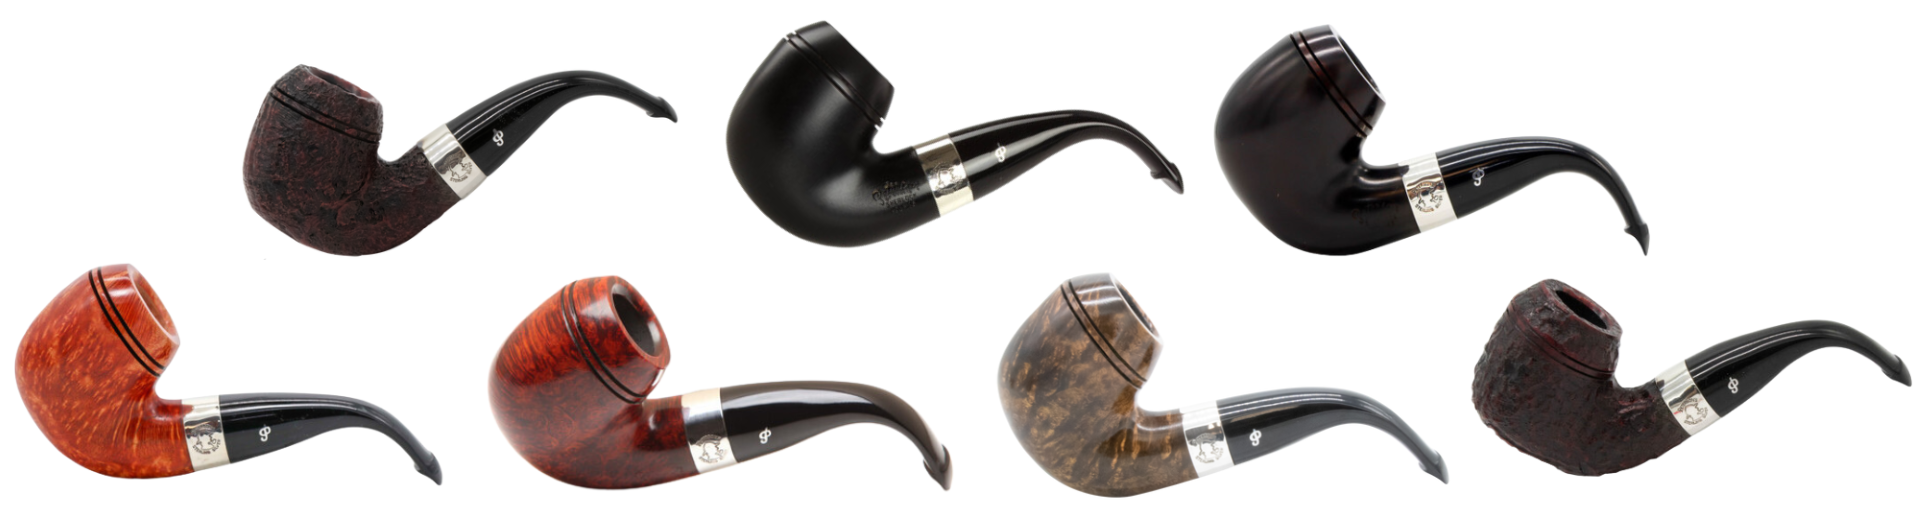 Peterson Sherlock Holmes Baskerville Tobacco Pipe